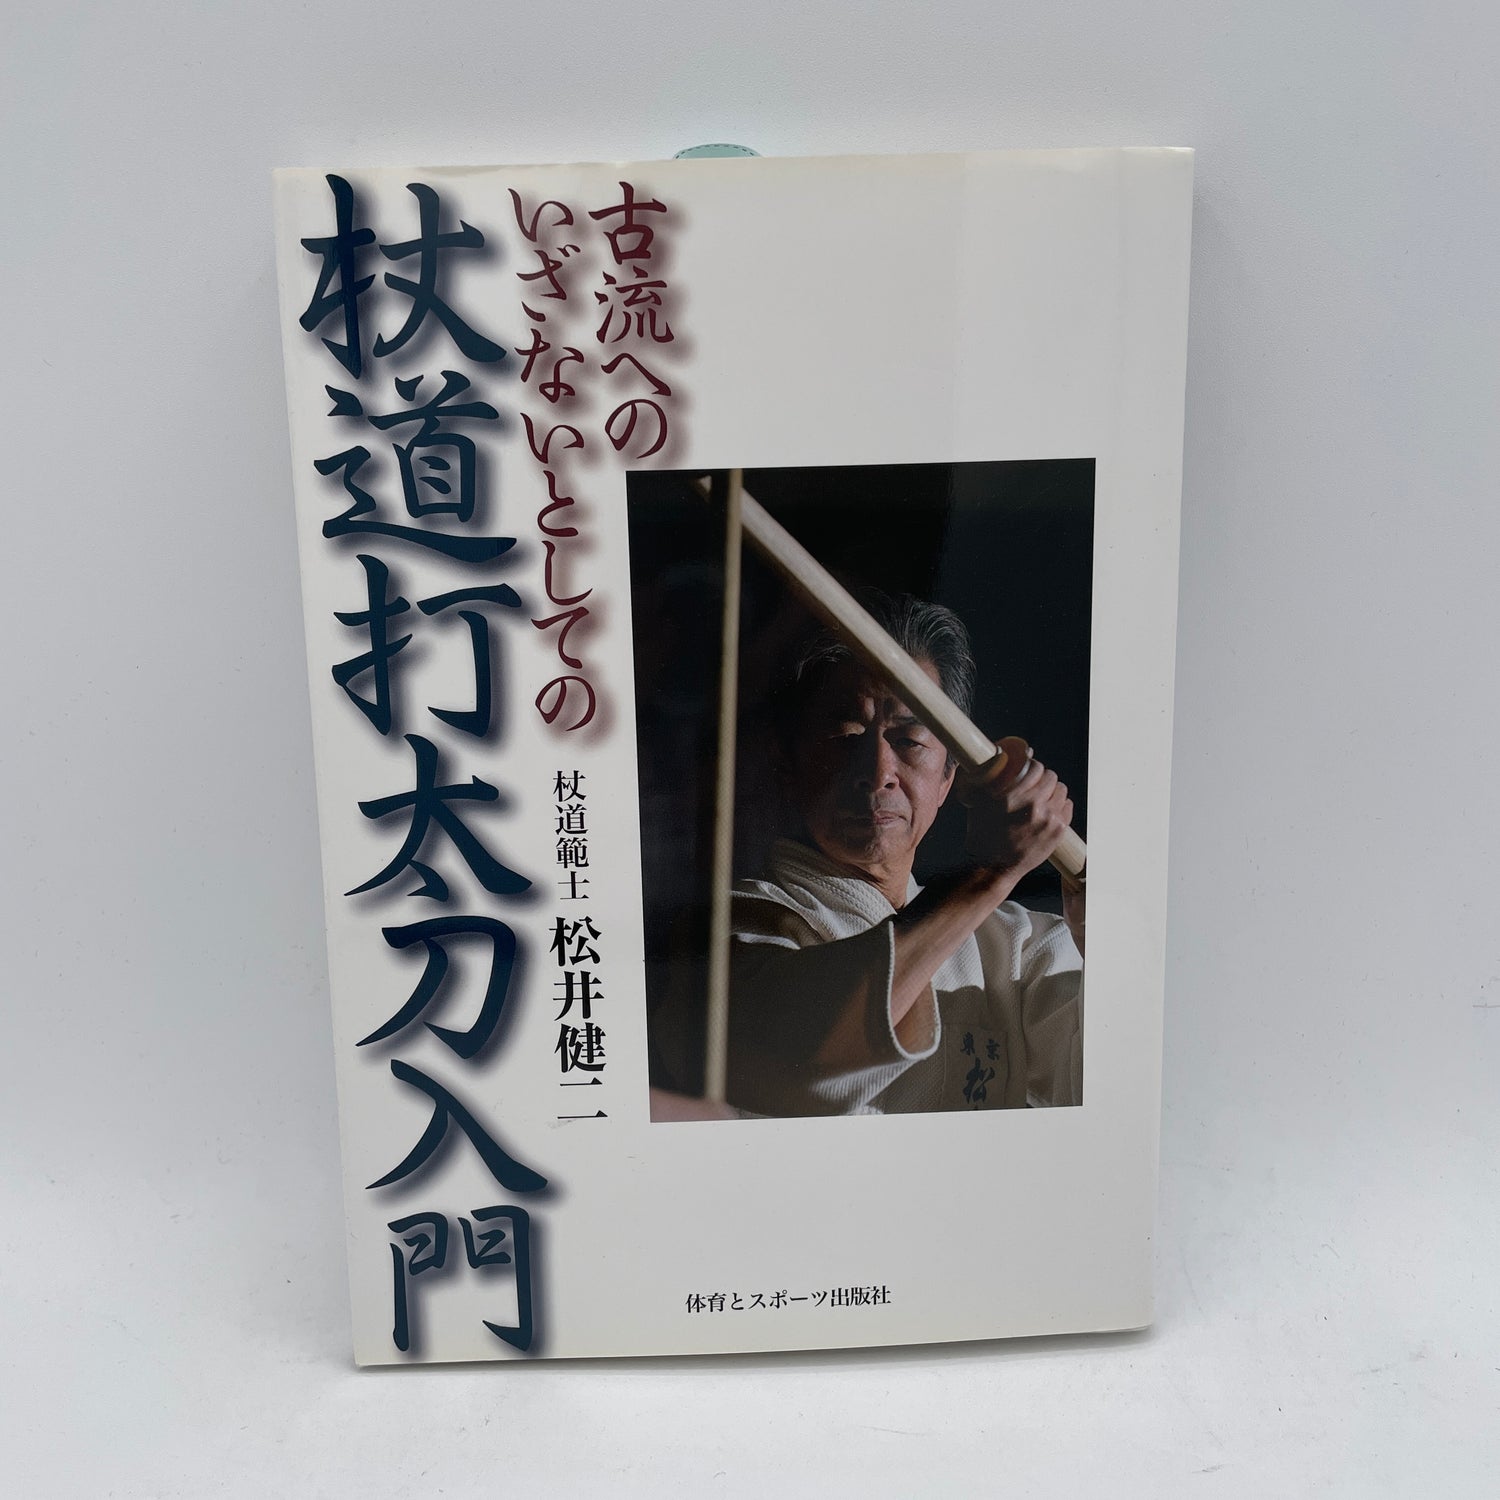 Intro to Jodo Uchitachi Book by Kenji Matsui